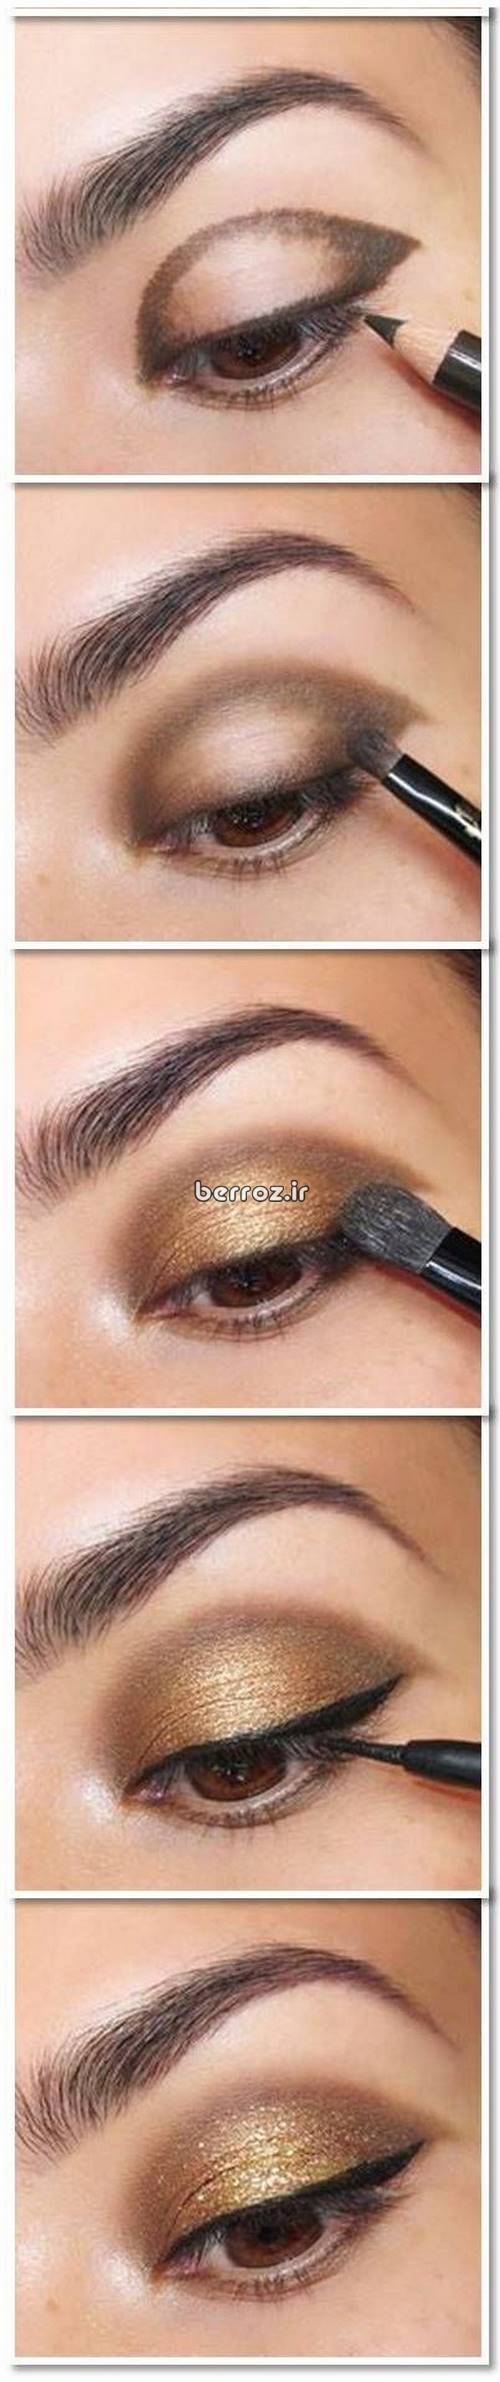 Eye make up step by step (4)